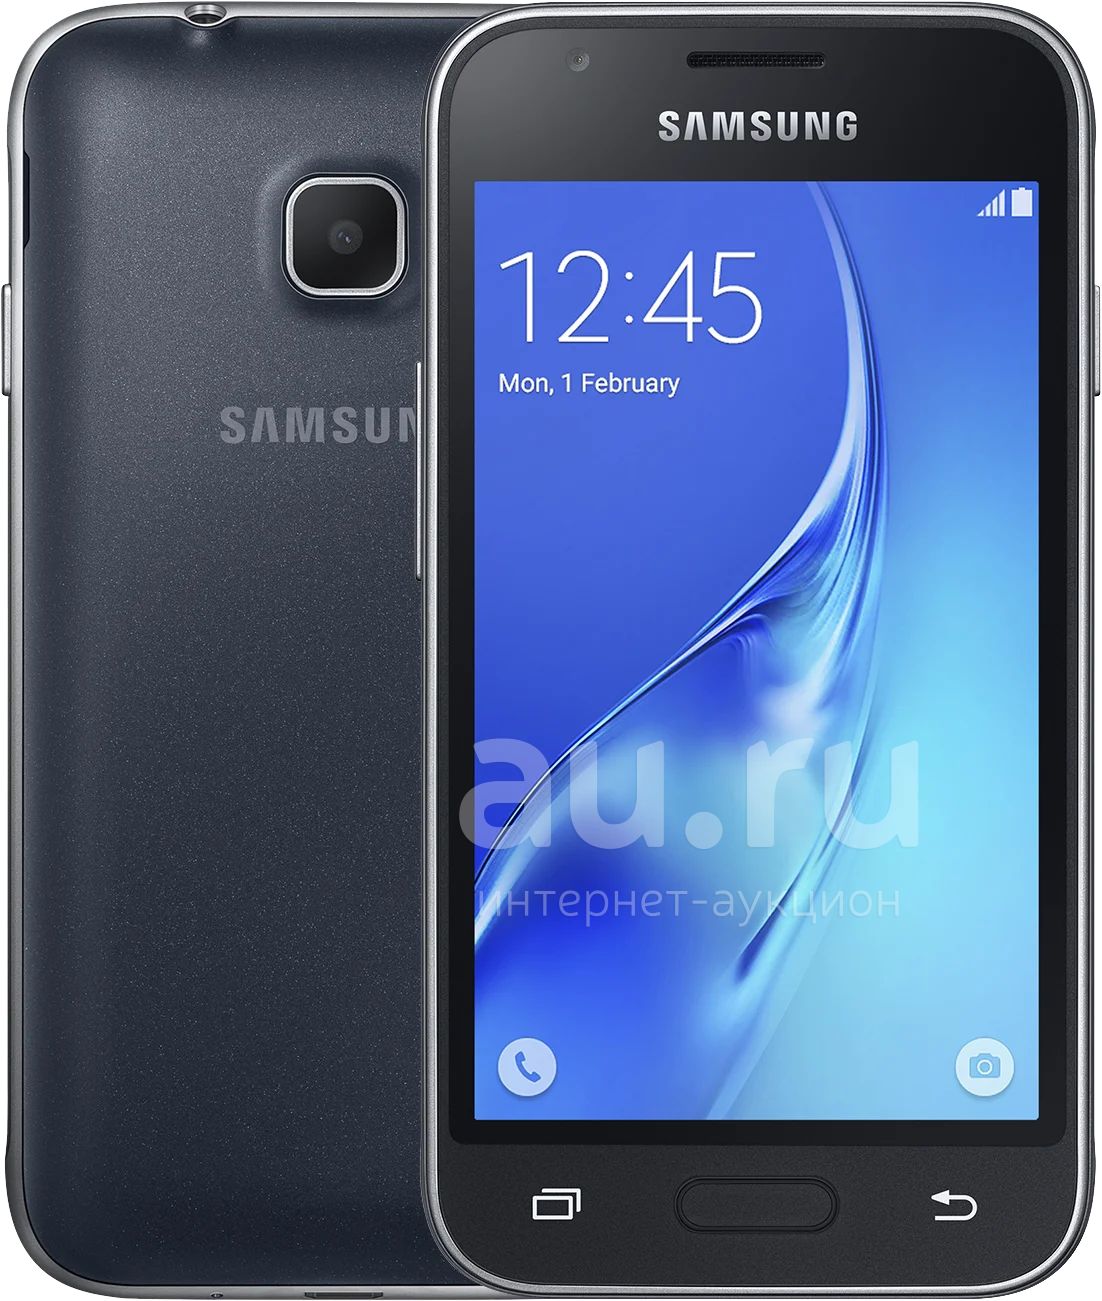 Galaxy 6 3. Самсунг j320f/DS. Samsung Galaxy j1 2016. Samsung Galaxy j1 2016 Black. Samsung g1 Mini.